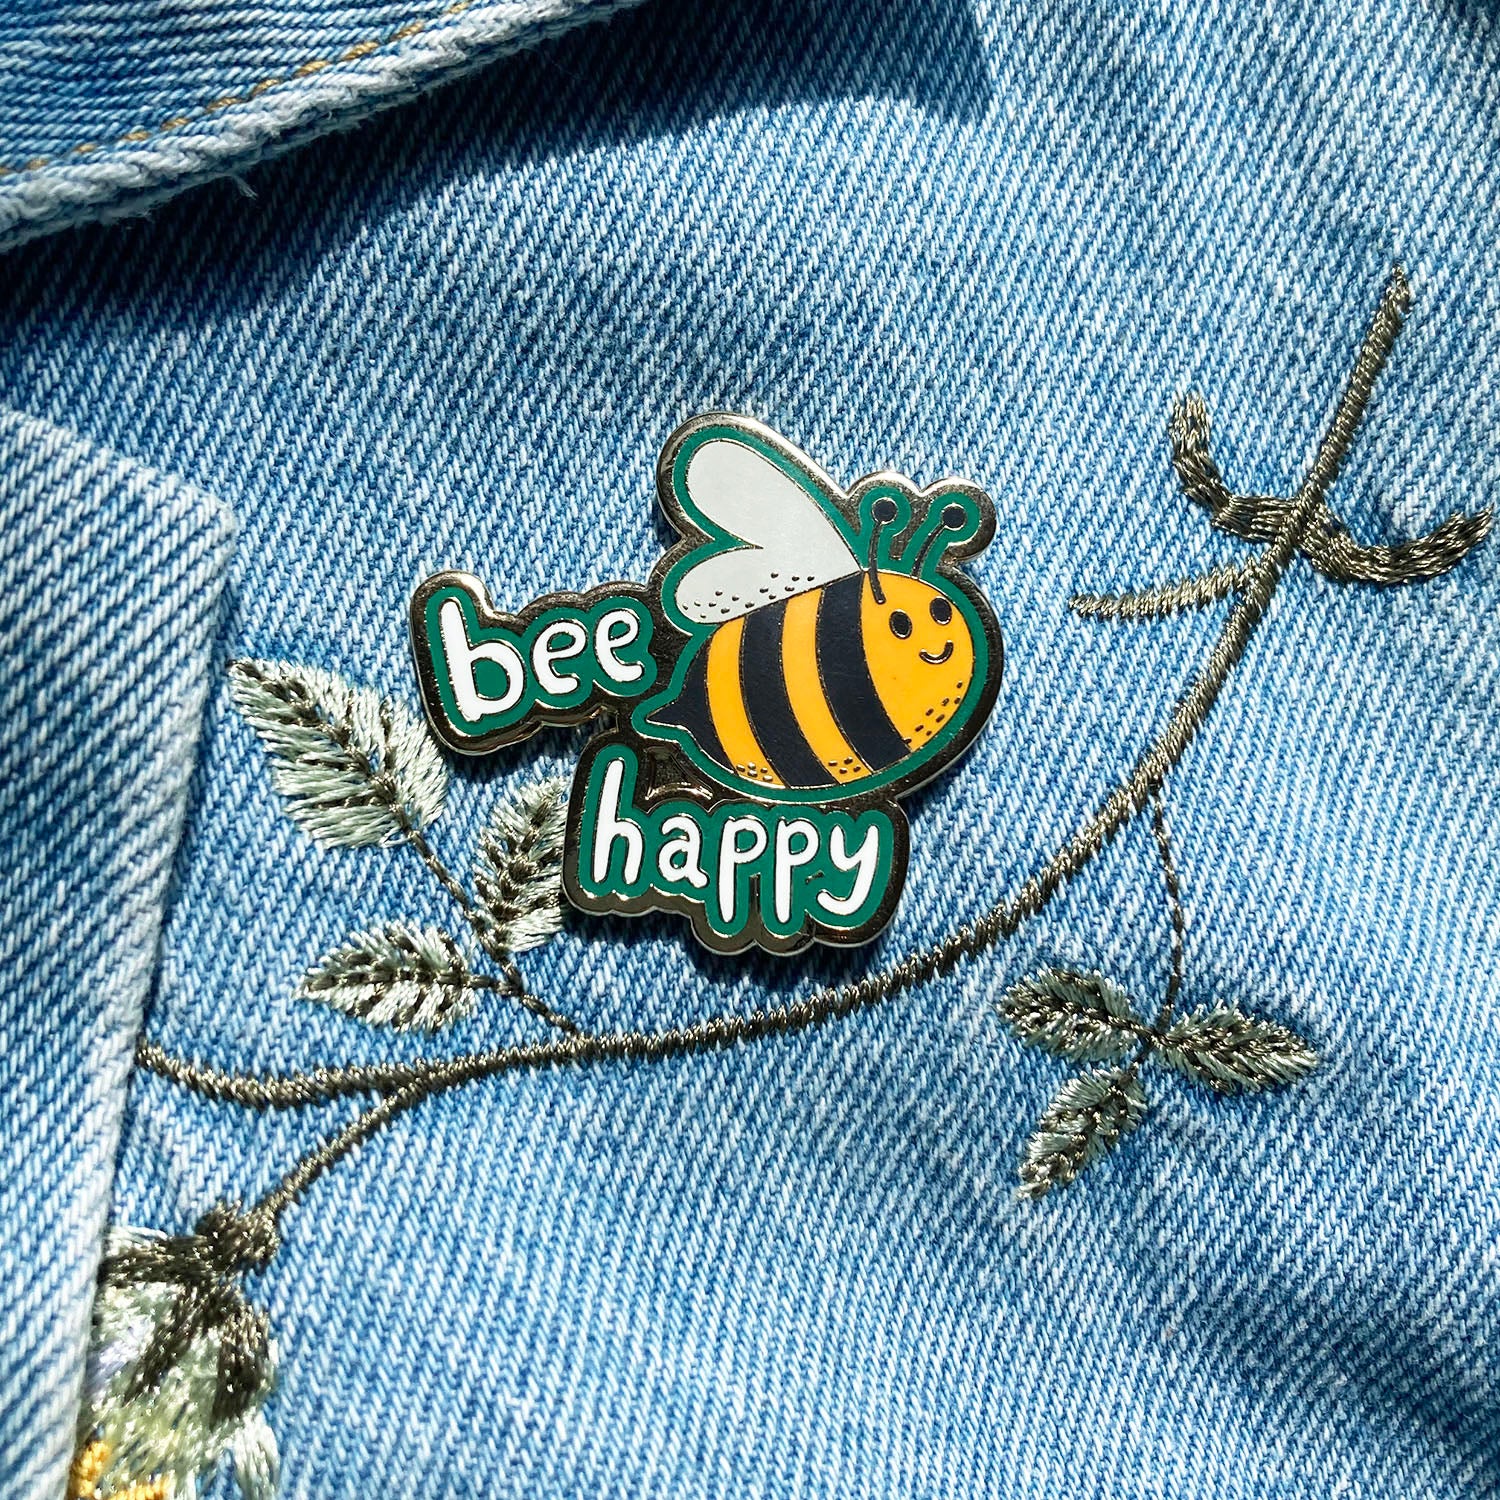 cute bee happy pin on jeans jacket